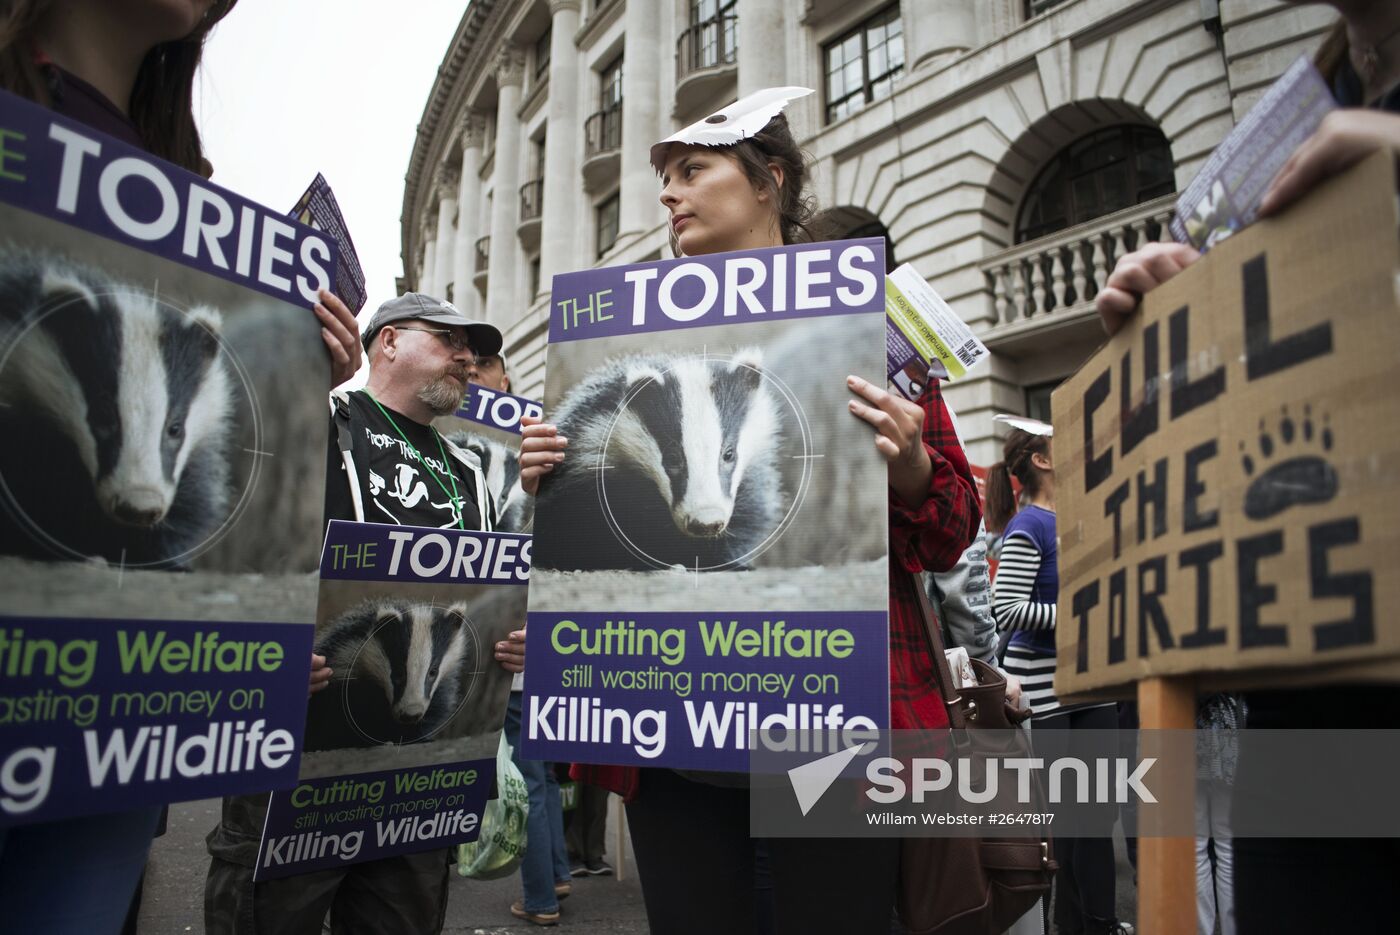 Anti-austerity rally in London